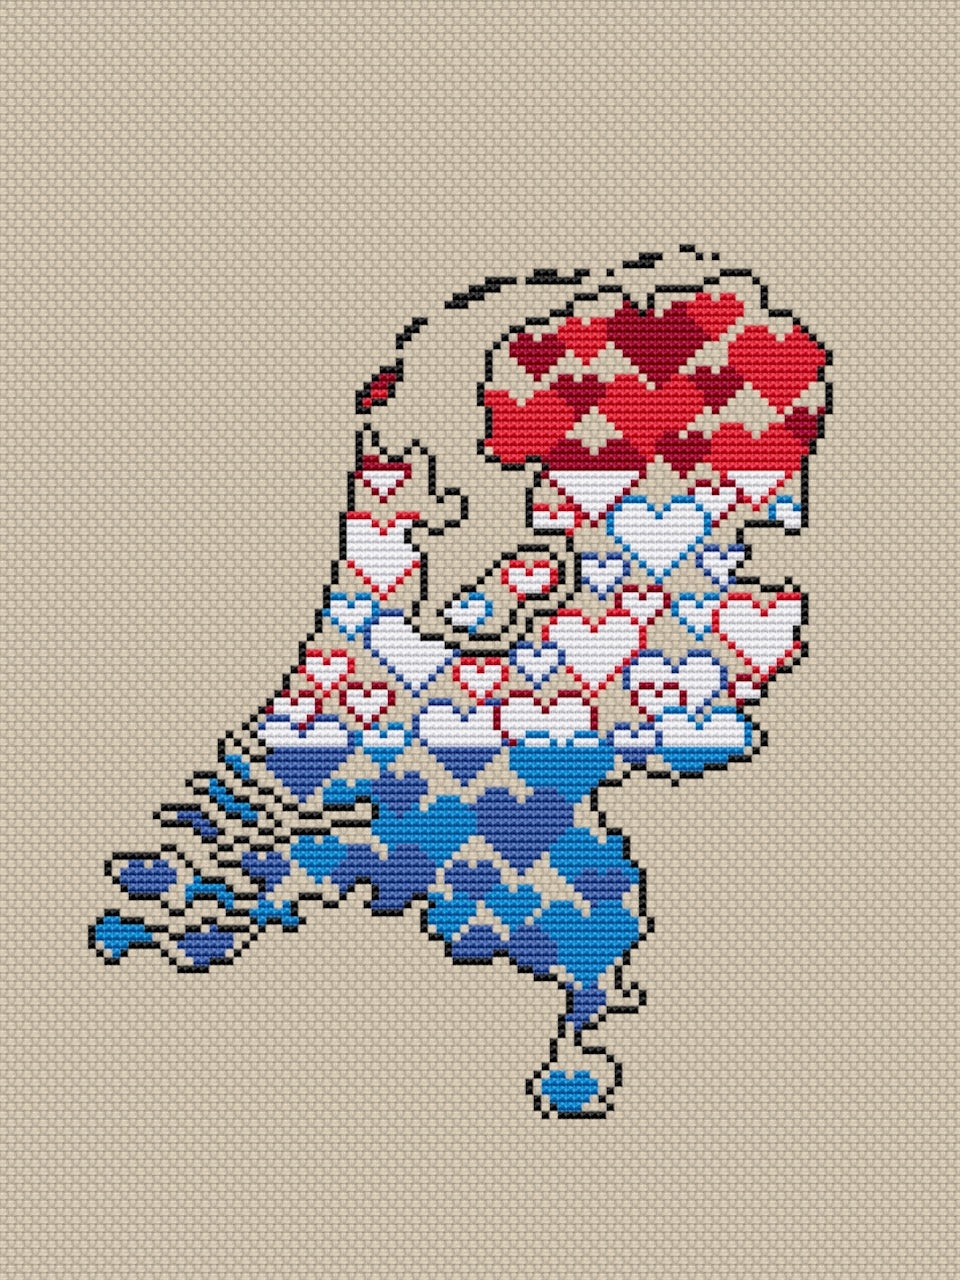 Netherlands cross stitch pattern